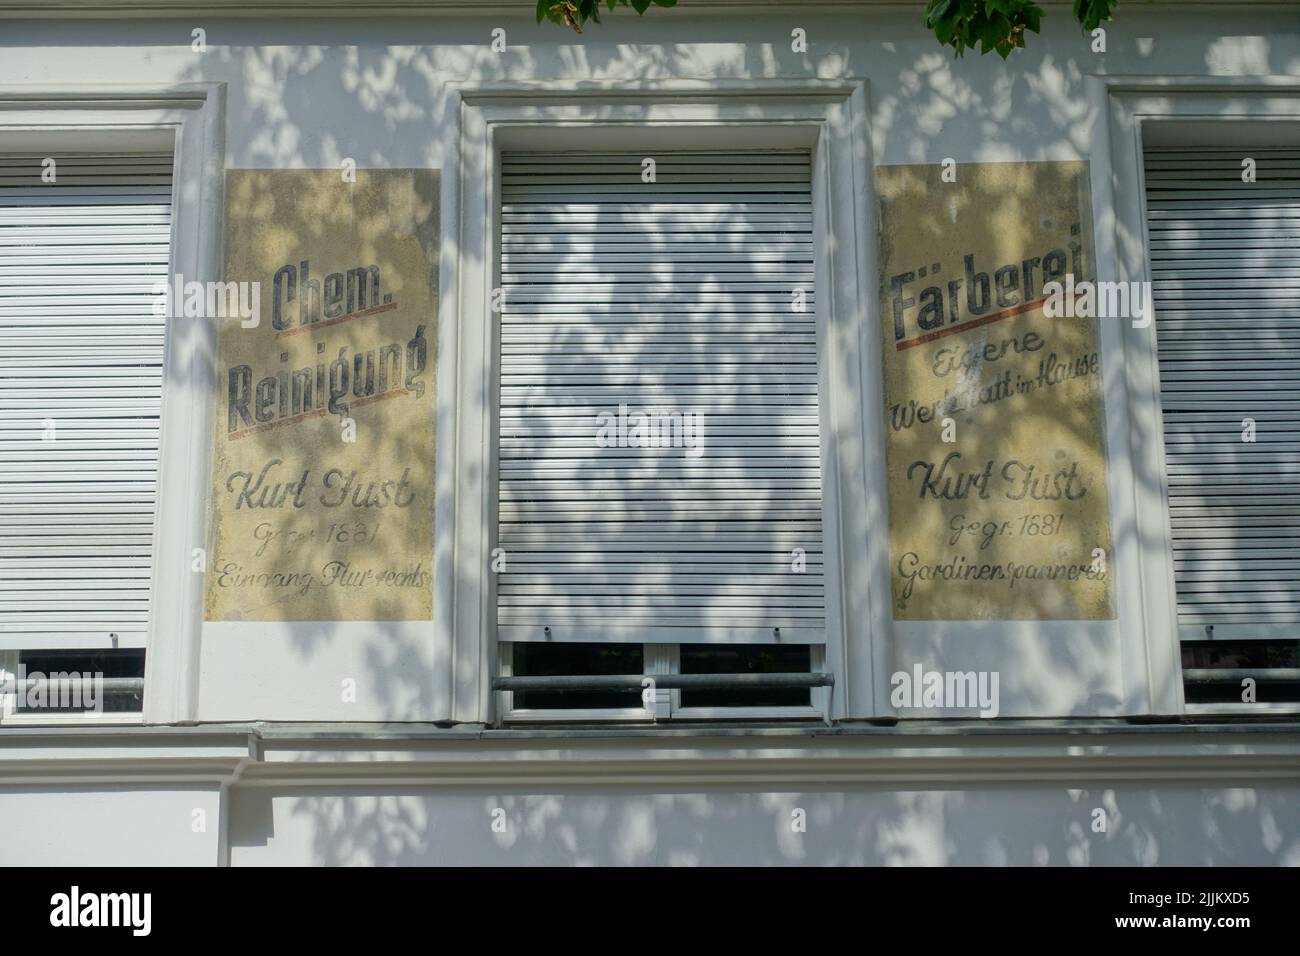 Berlin, historische Werbung an einer Fassade // Berlin, publicité historique sur une façade Banque D'Images